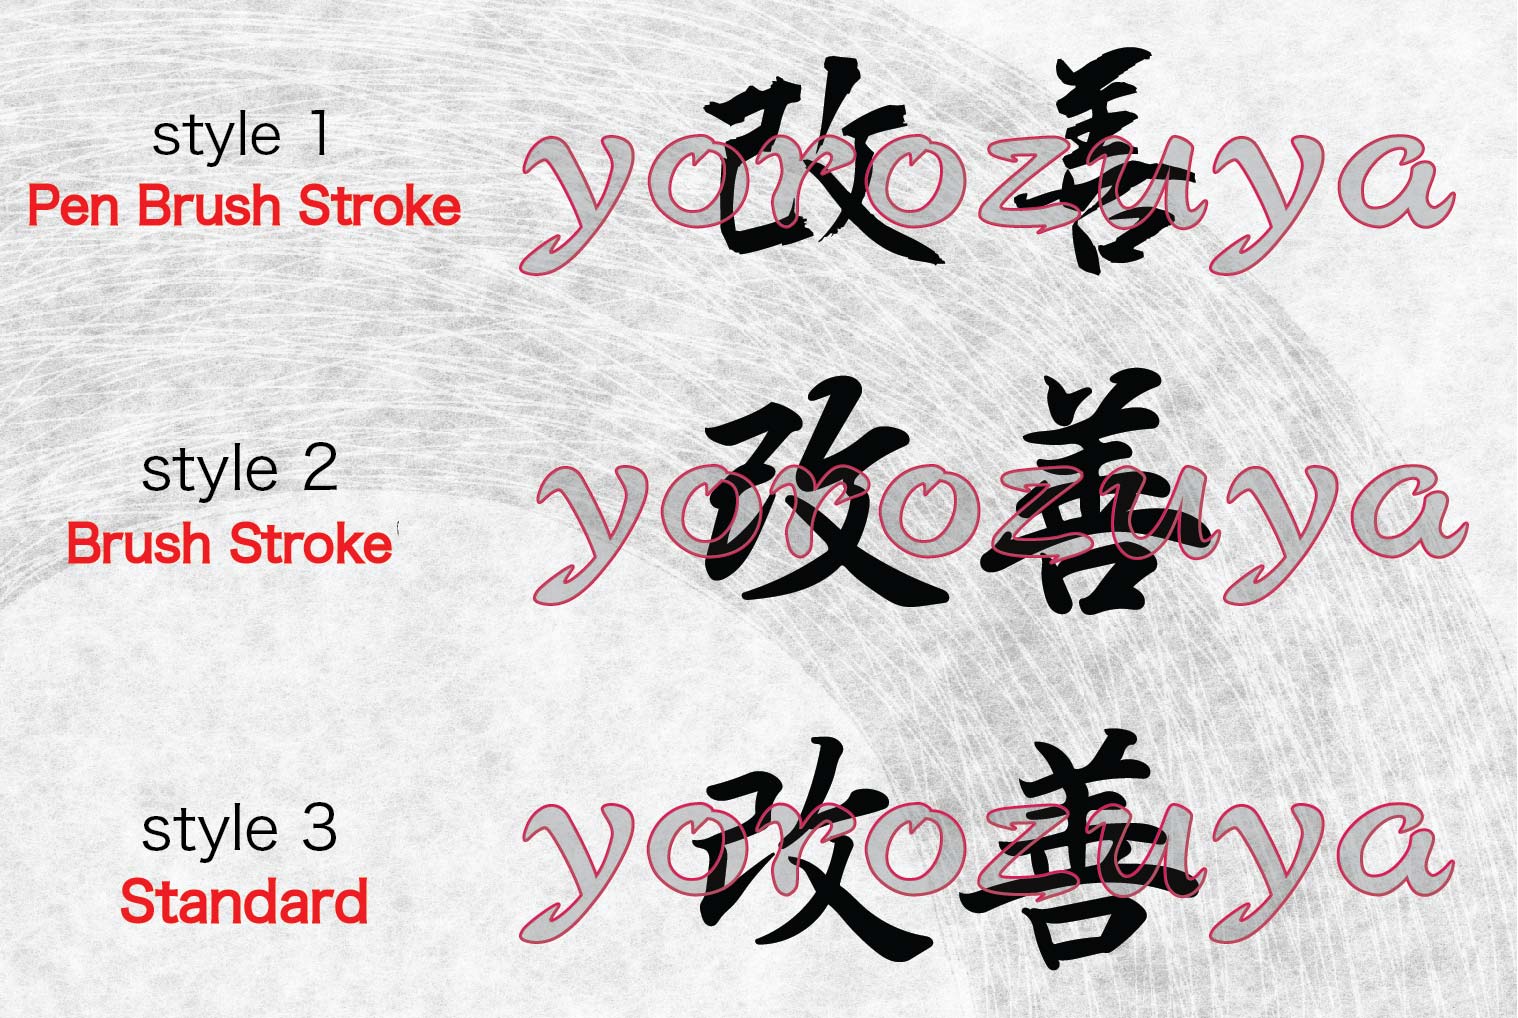 3 Kaizen Tattoo Ideas In Brush Stroke Japanese Kanji Symbols For Simple &  Meaningful Word Tattoo. – Yorozuya